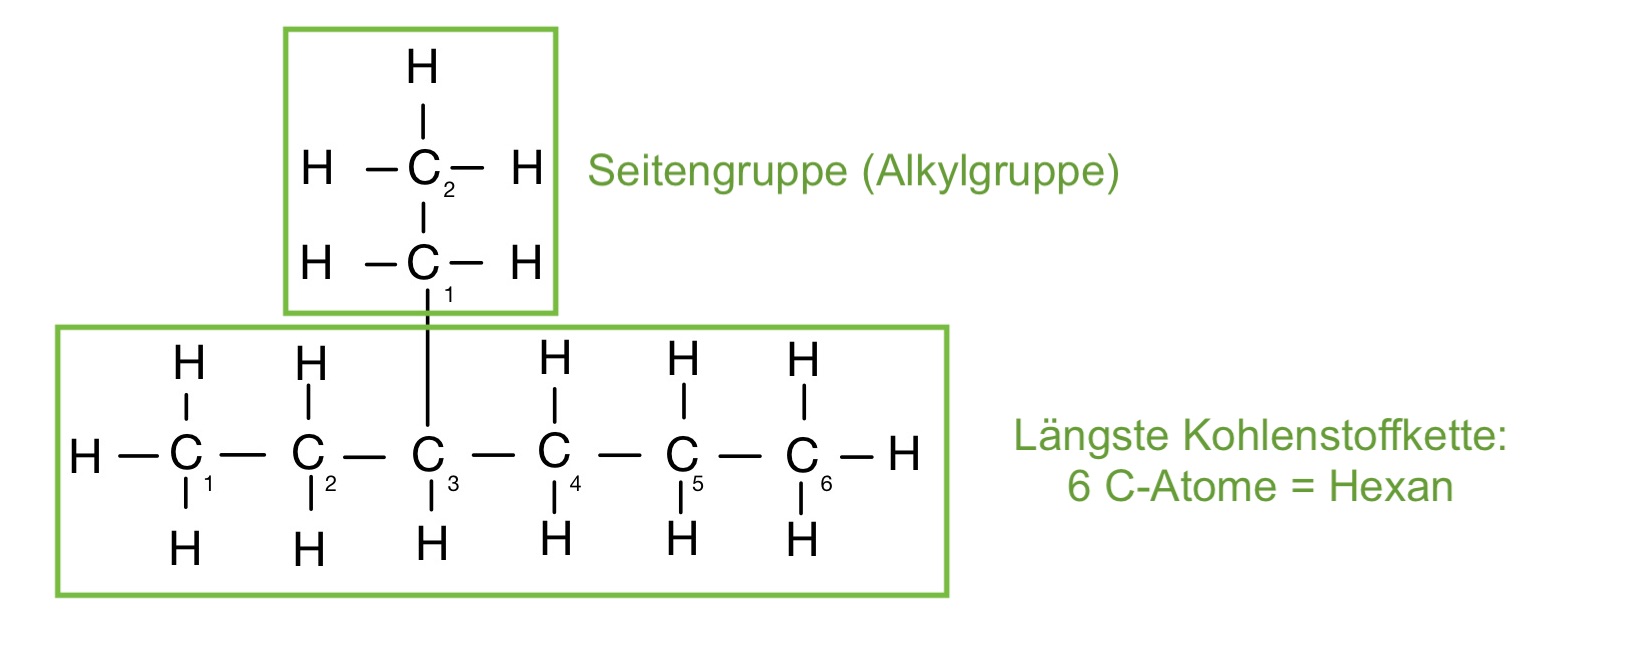 Schritt 1 der Nomenklatur nach IUPAC